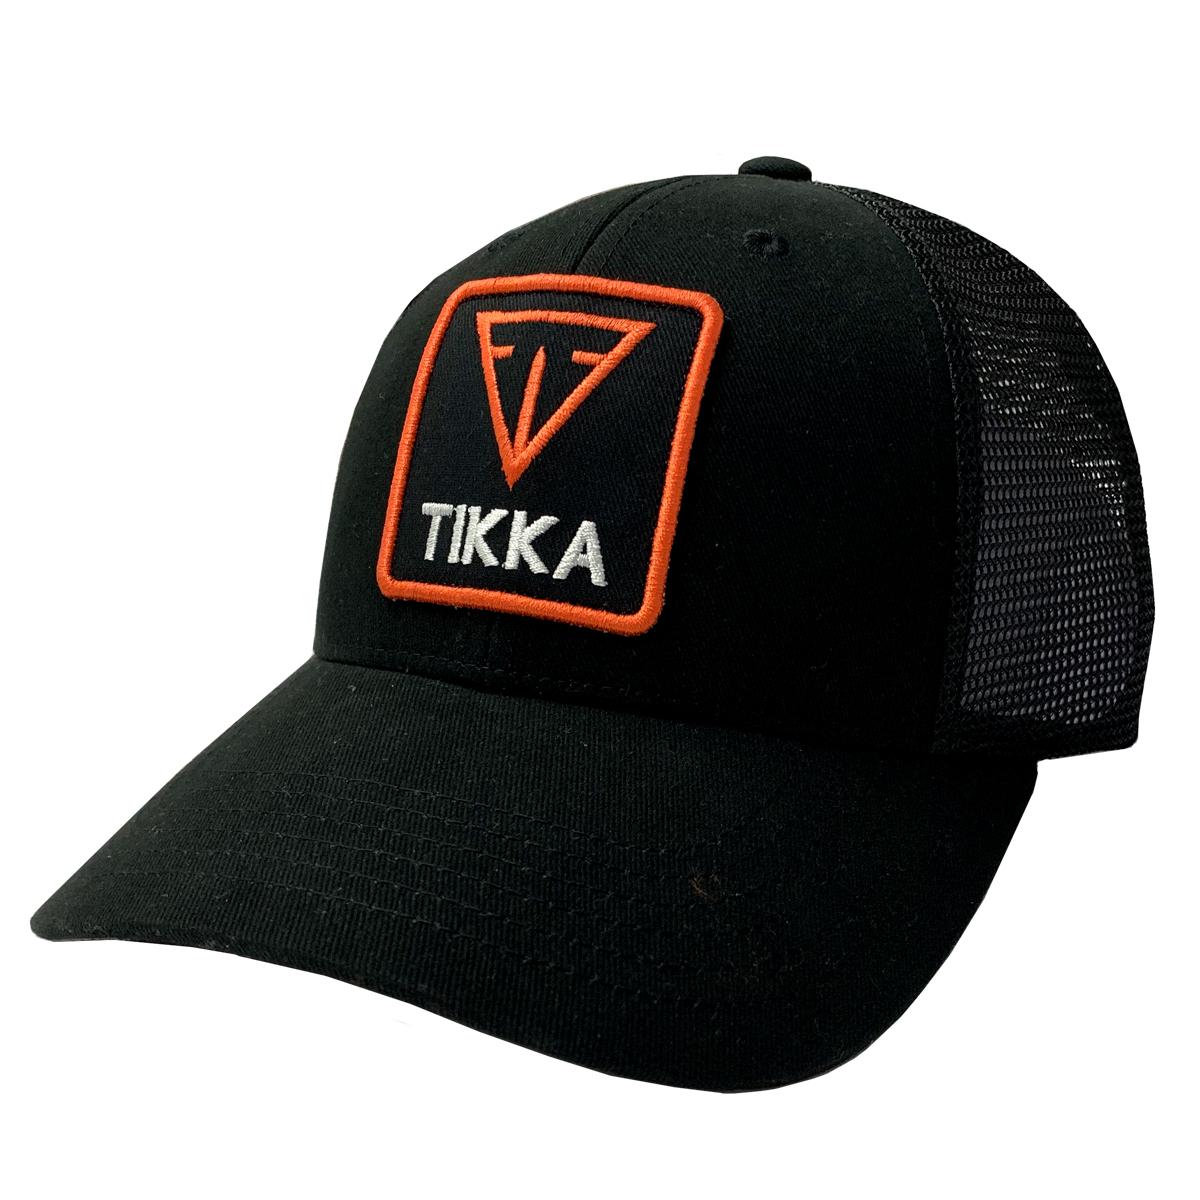 tikka-trucker-hat-stoeger-canada